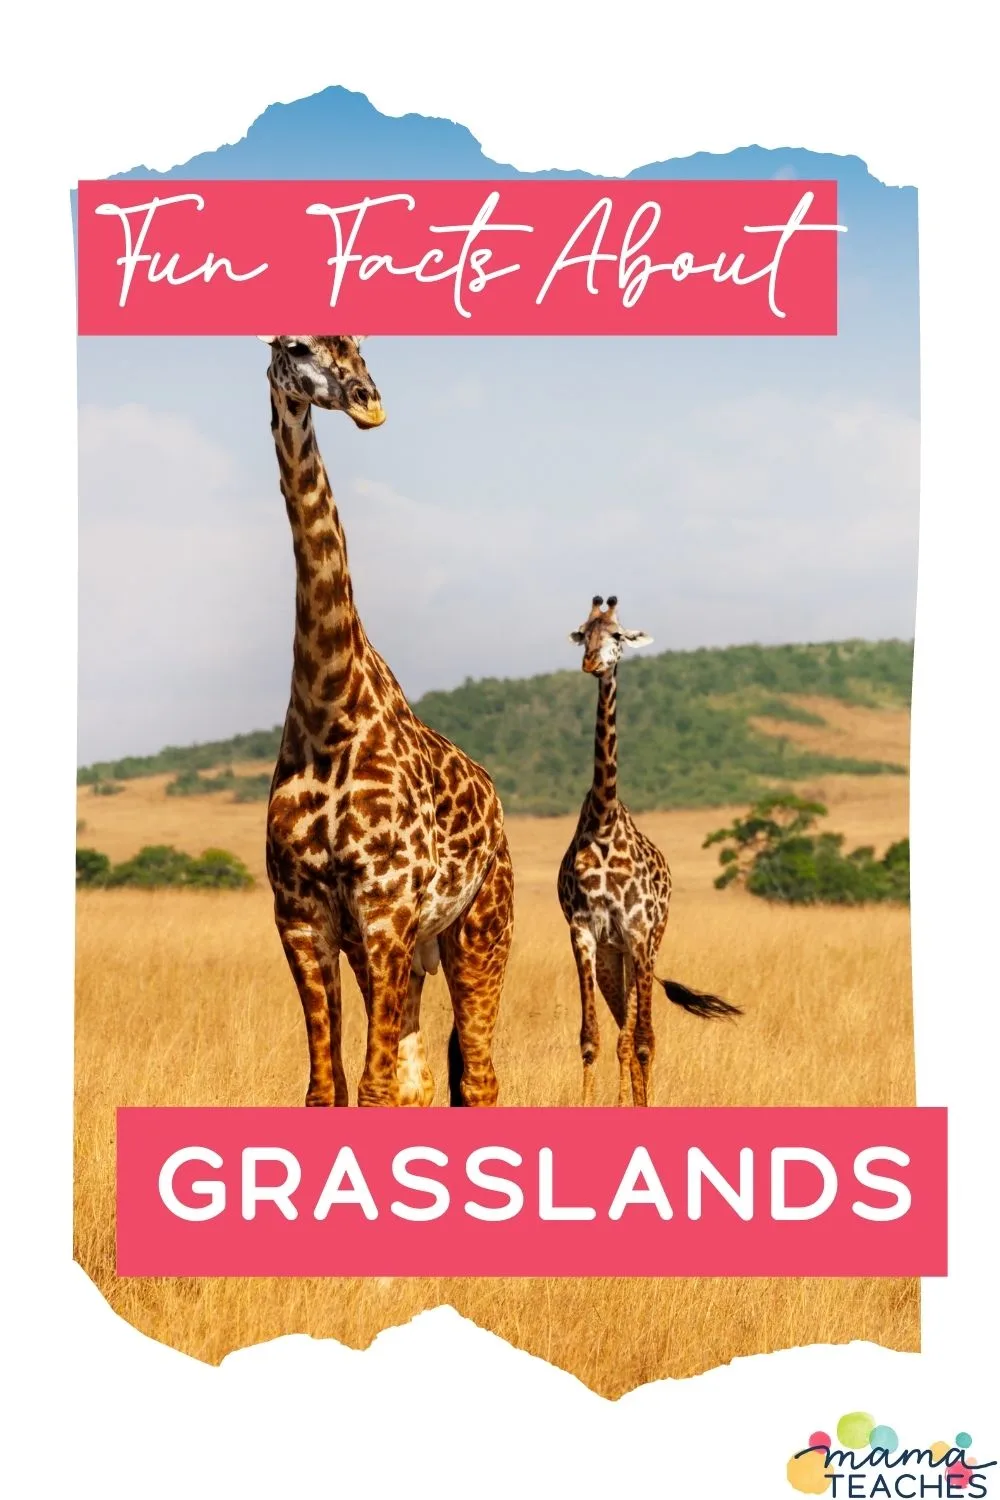 Fun Facts About Grasslands